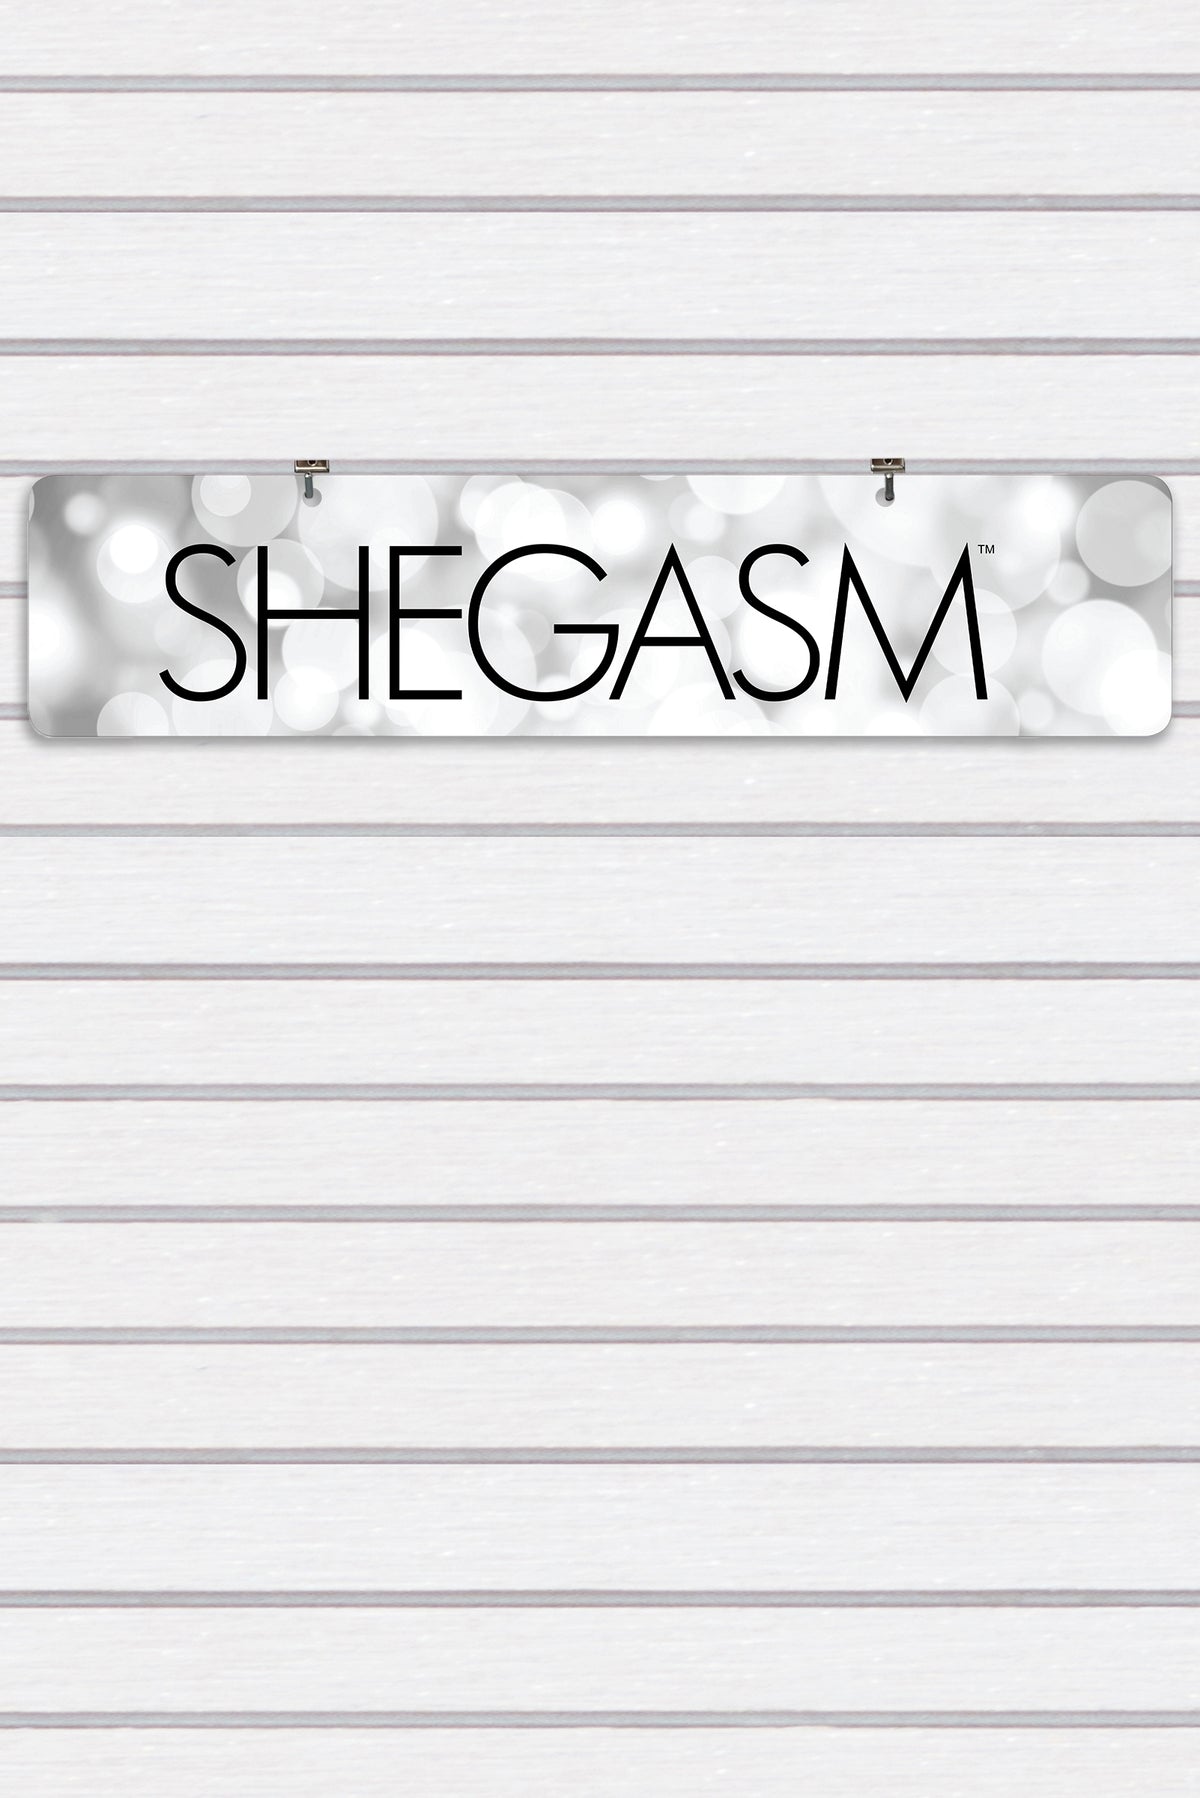 Shegasm Display Sign